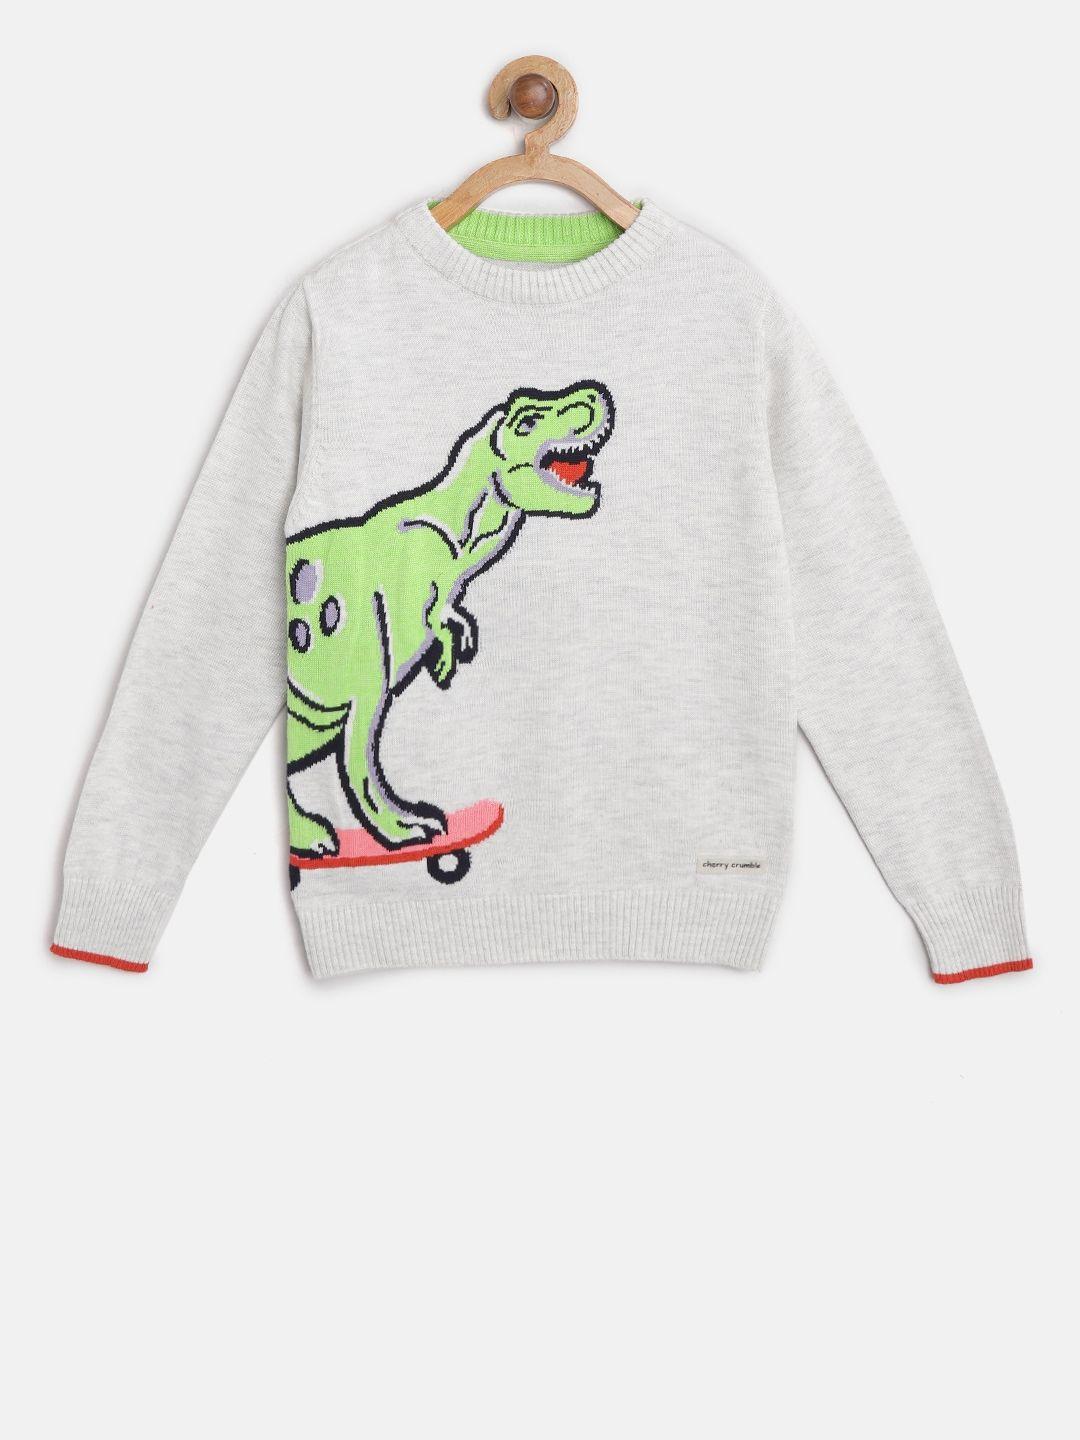 cherry-crumble-unisex-kids-grey-melange-&-green-printed-sweater